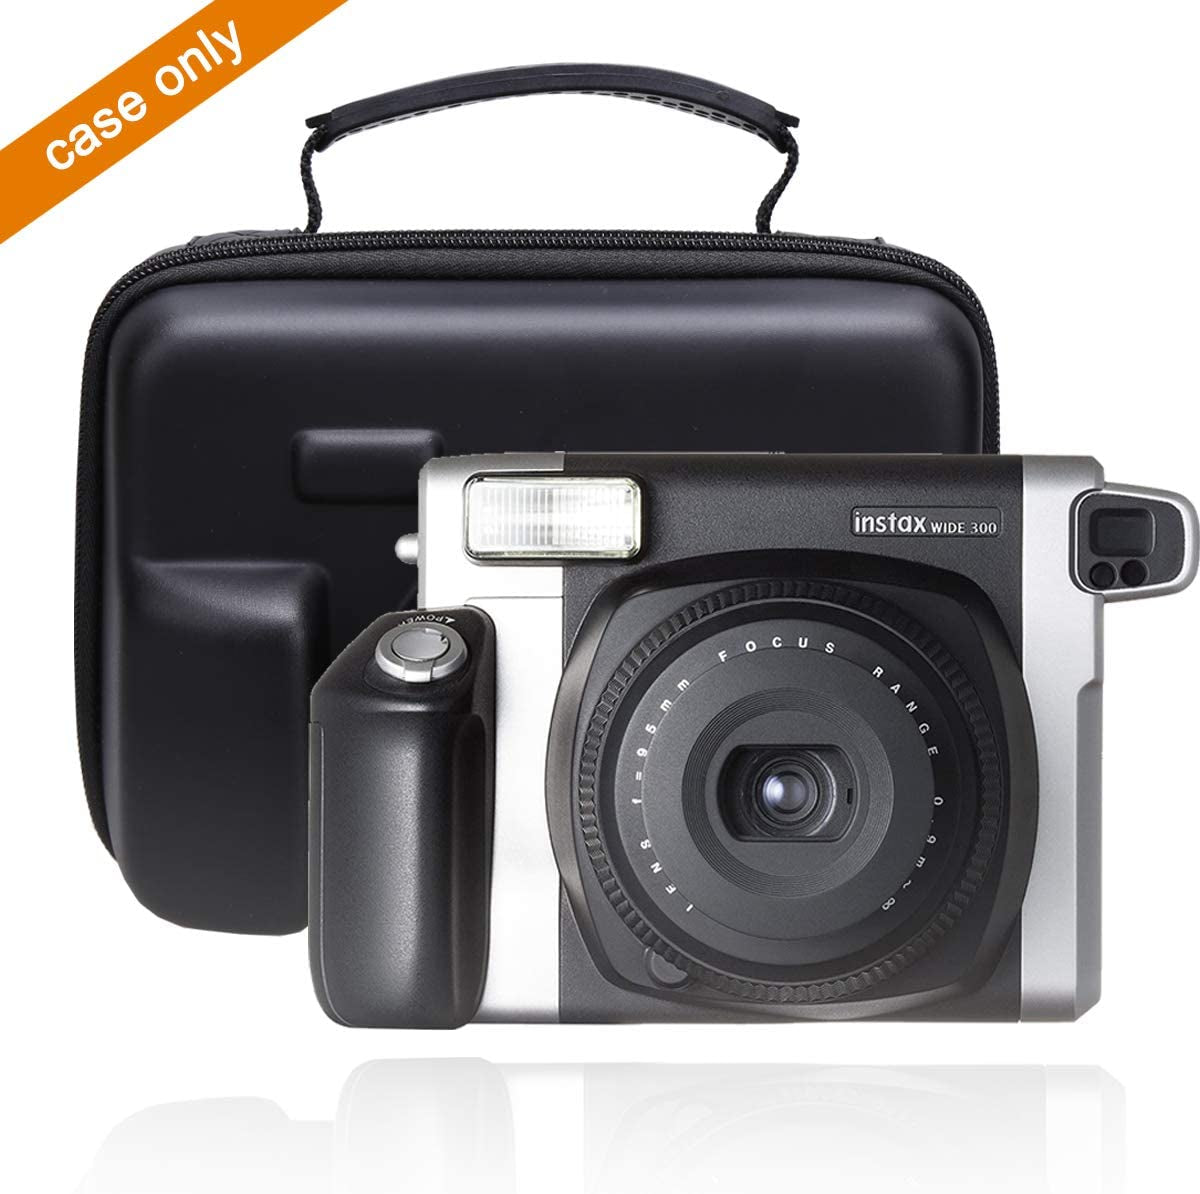 Fujifilm Instax Wide 300 Instant Film Camera - Black/Silver for